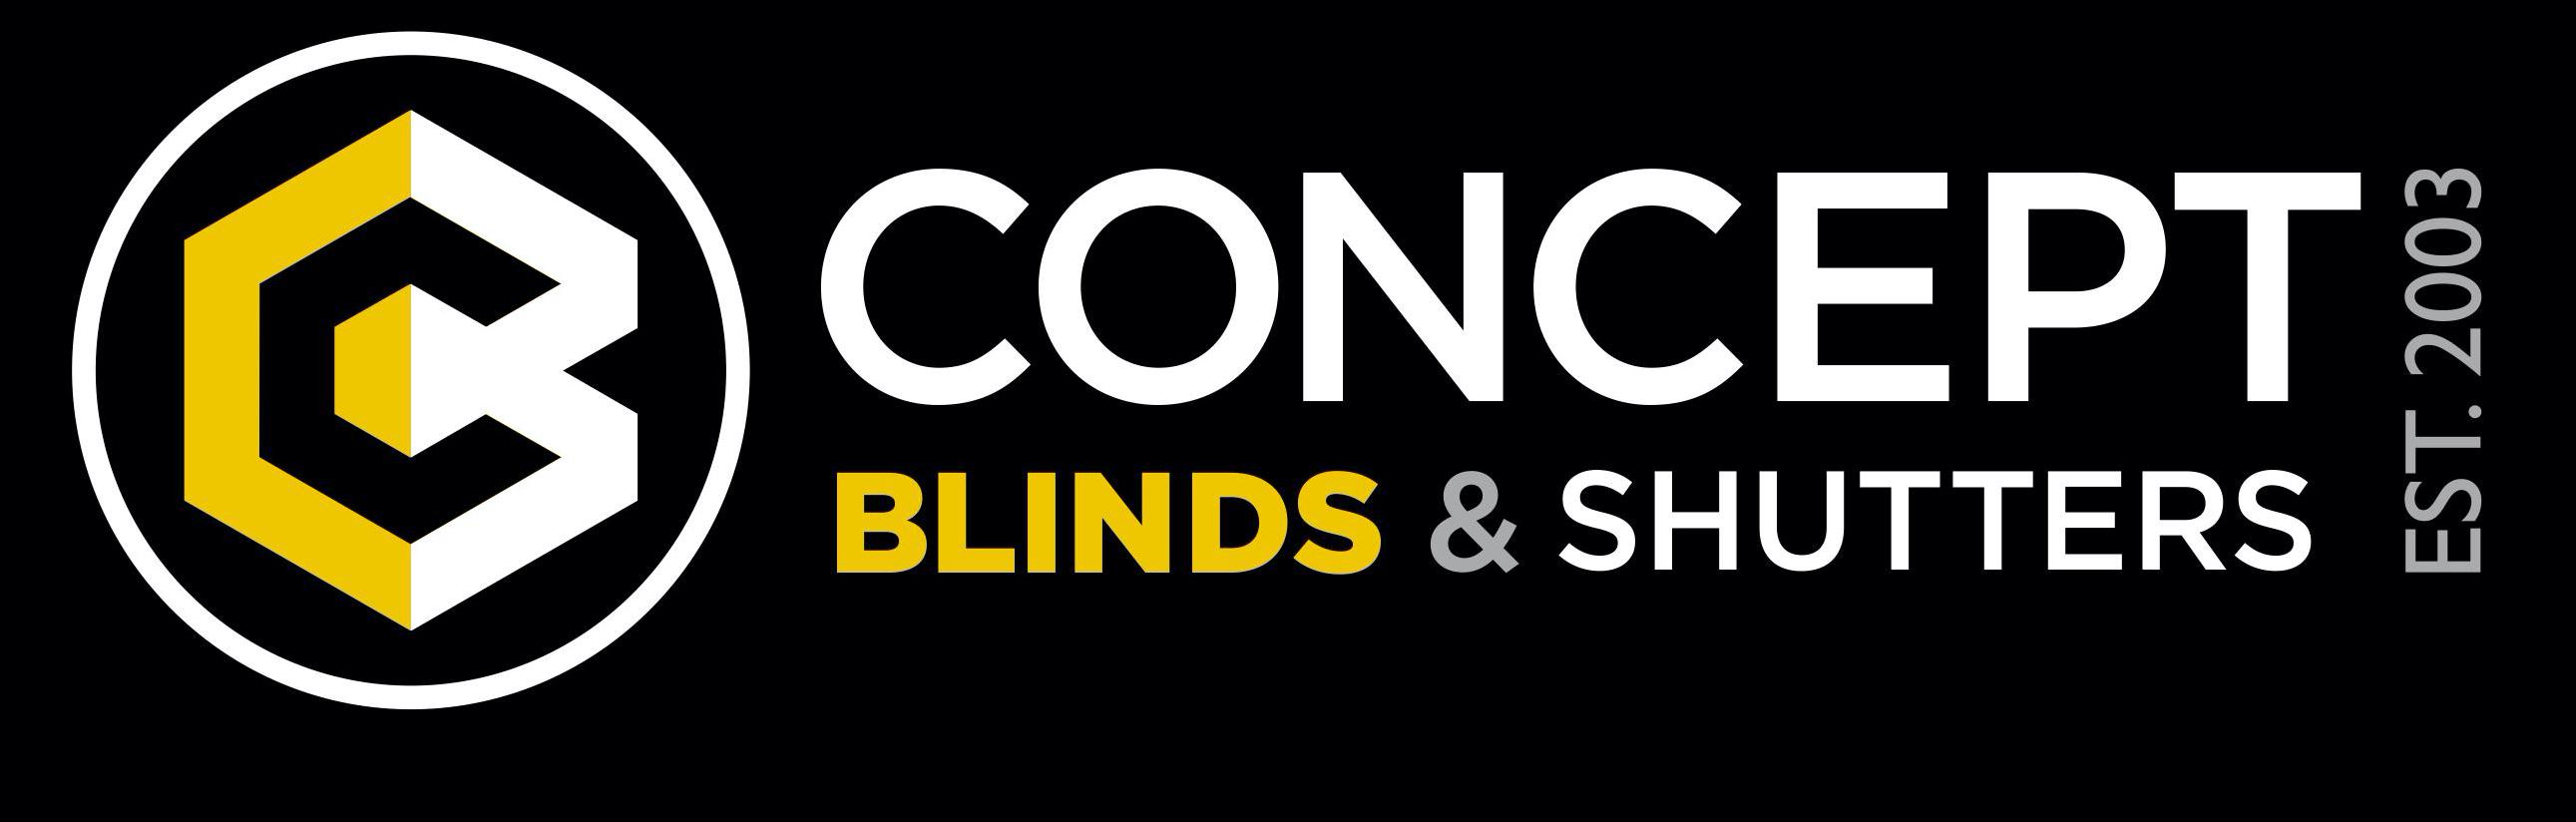 Concept Blinds & Shutters Logo